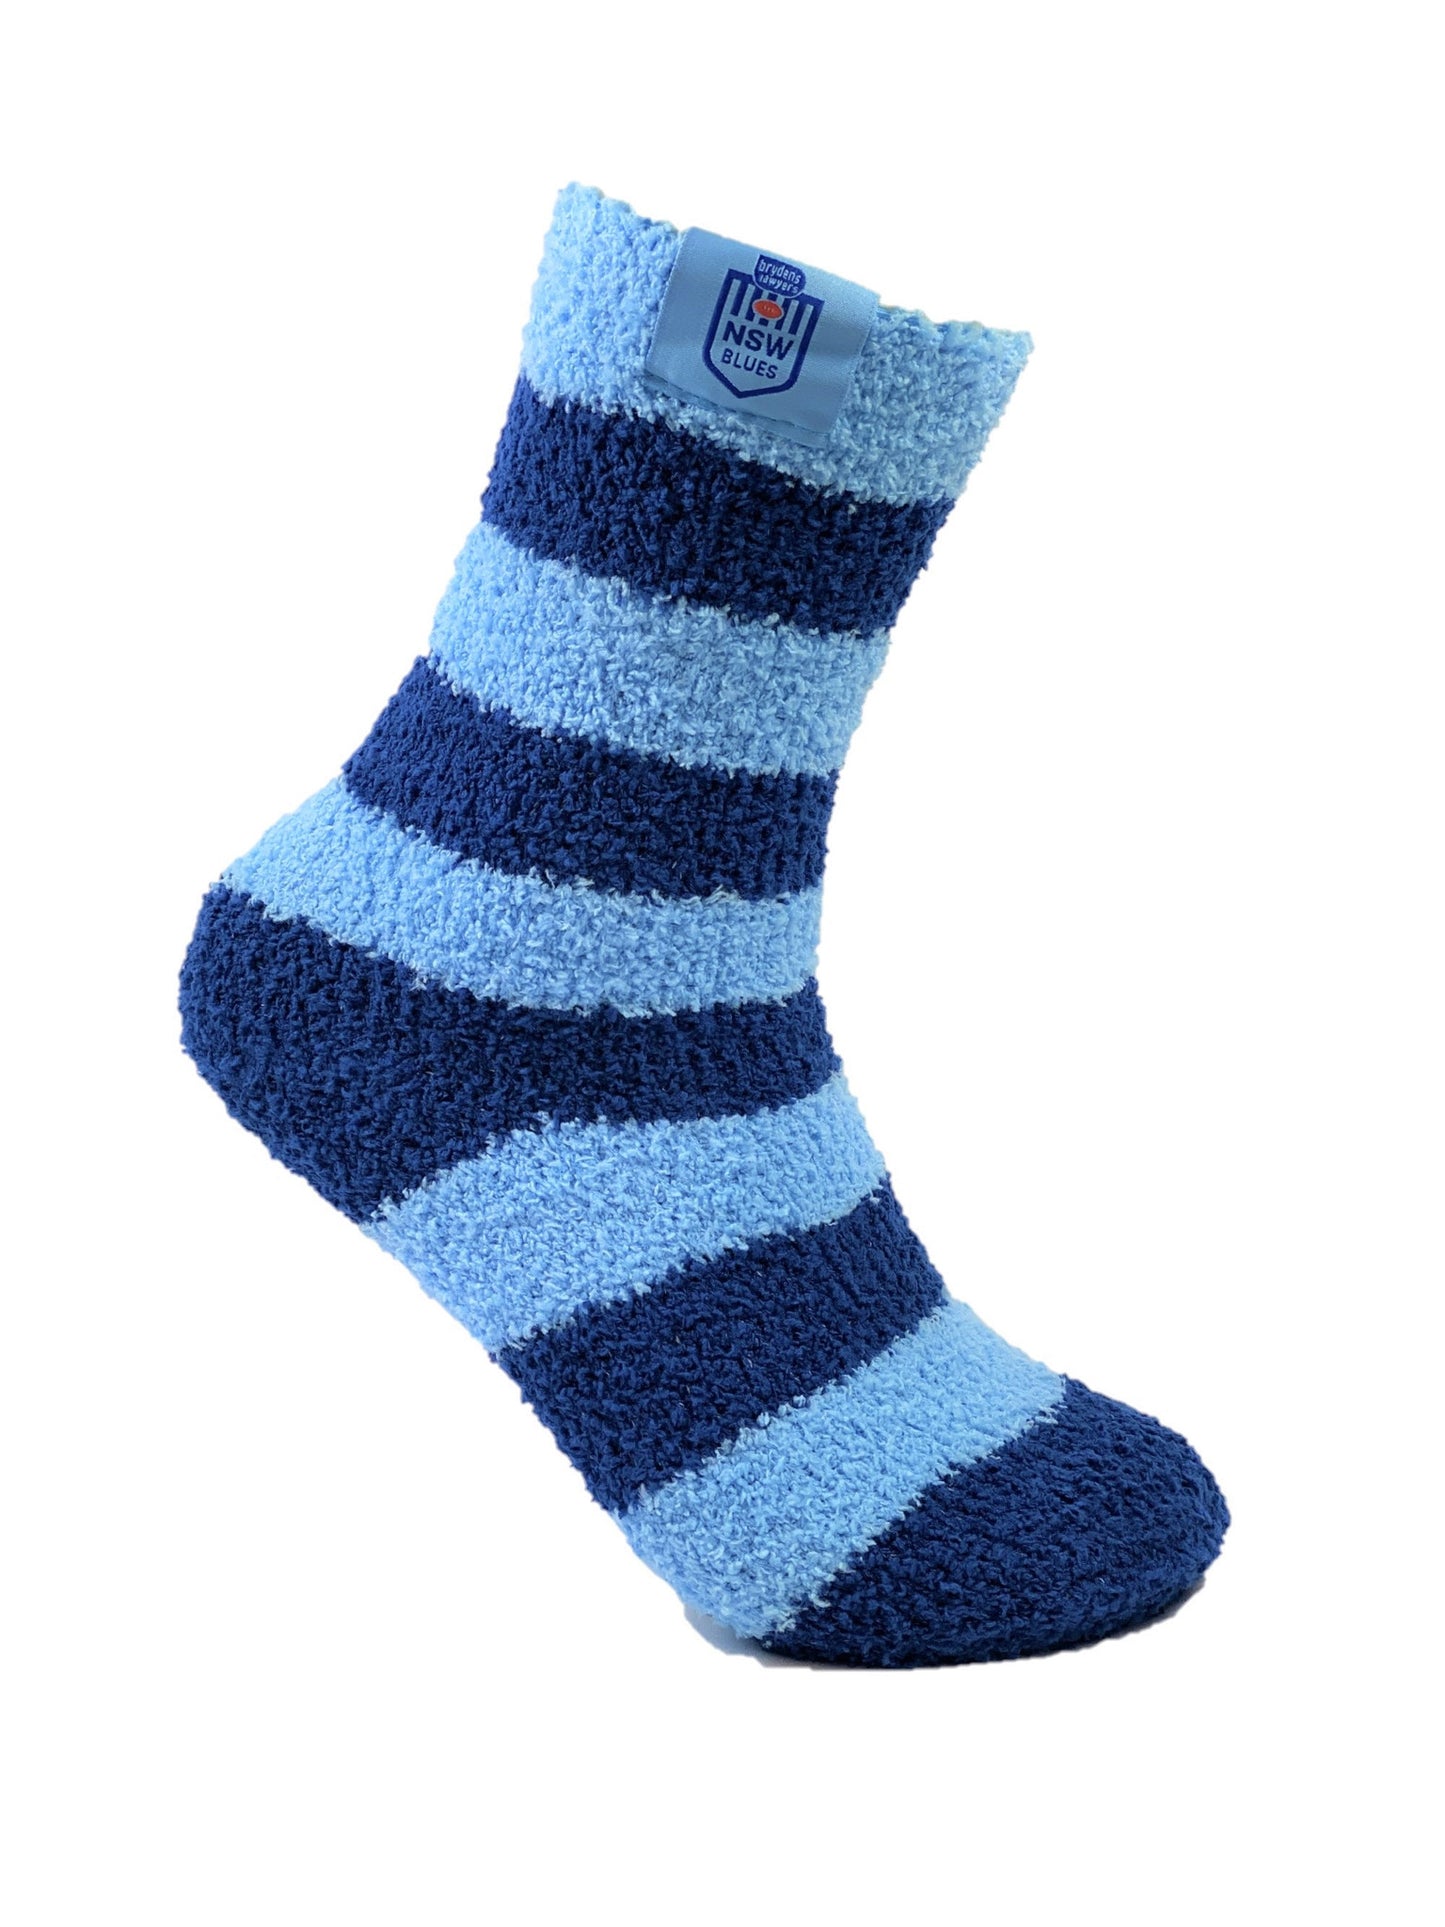 NSW Blues NRL Bed Socks